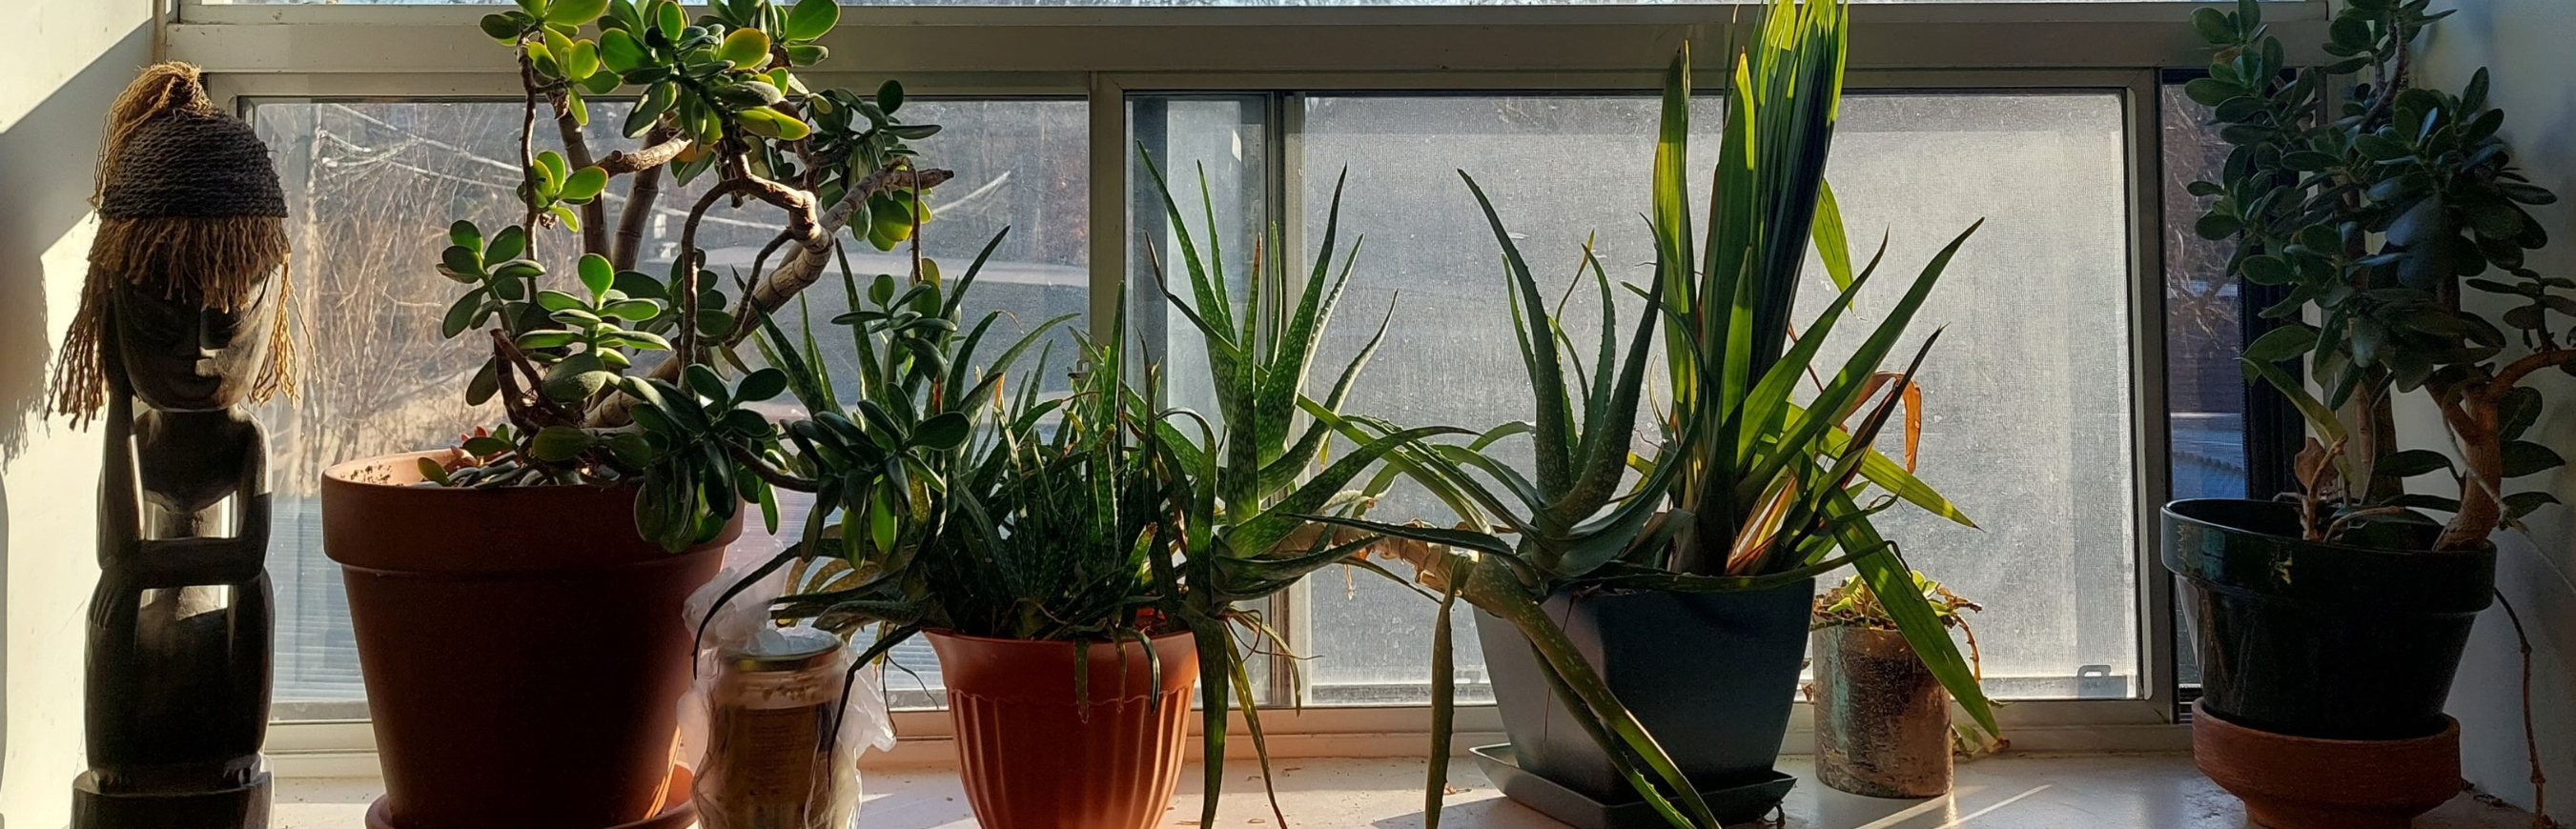 Plants sitting on a shelf in the sun